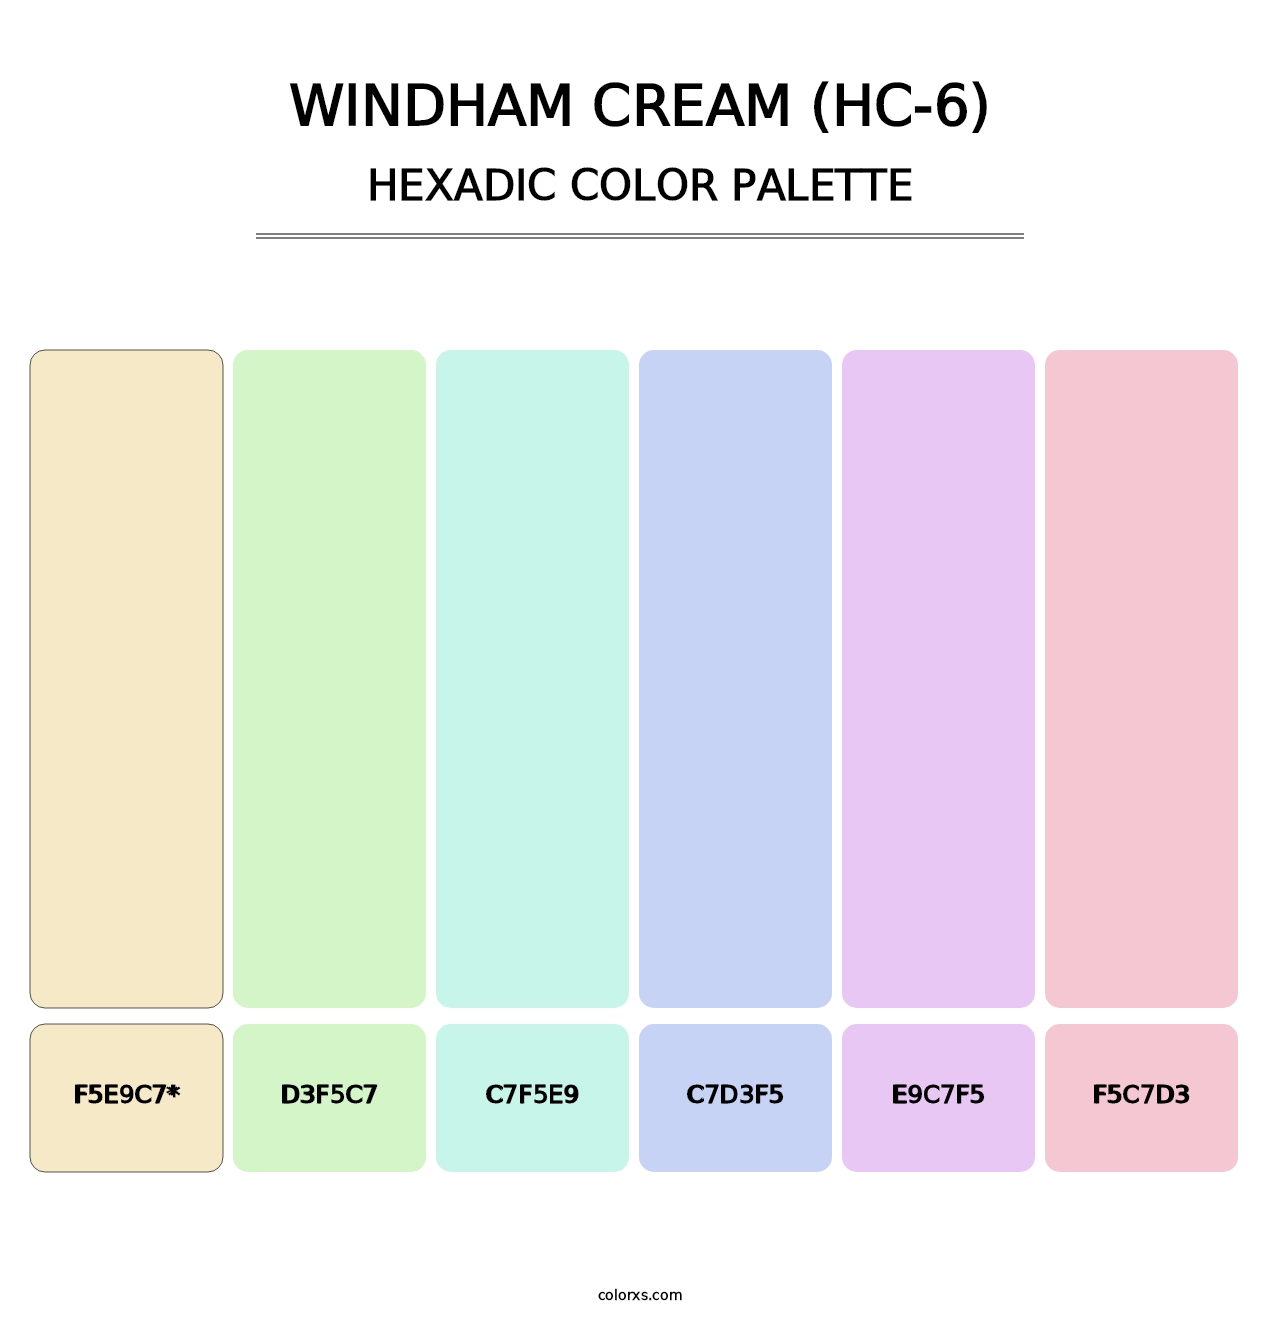 Windham Cream (HC-6) - Hexadic Color Palette